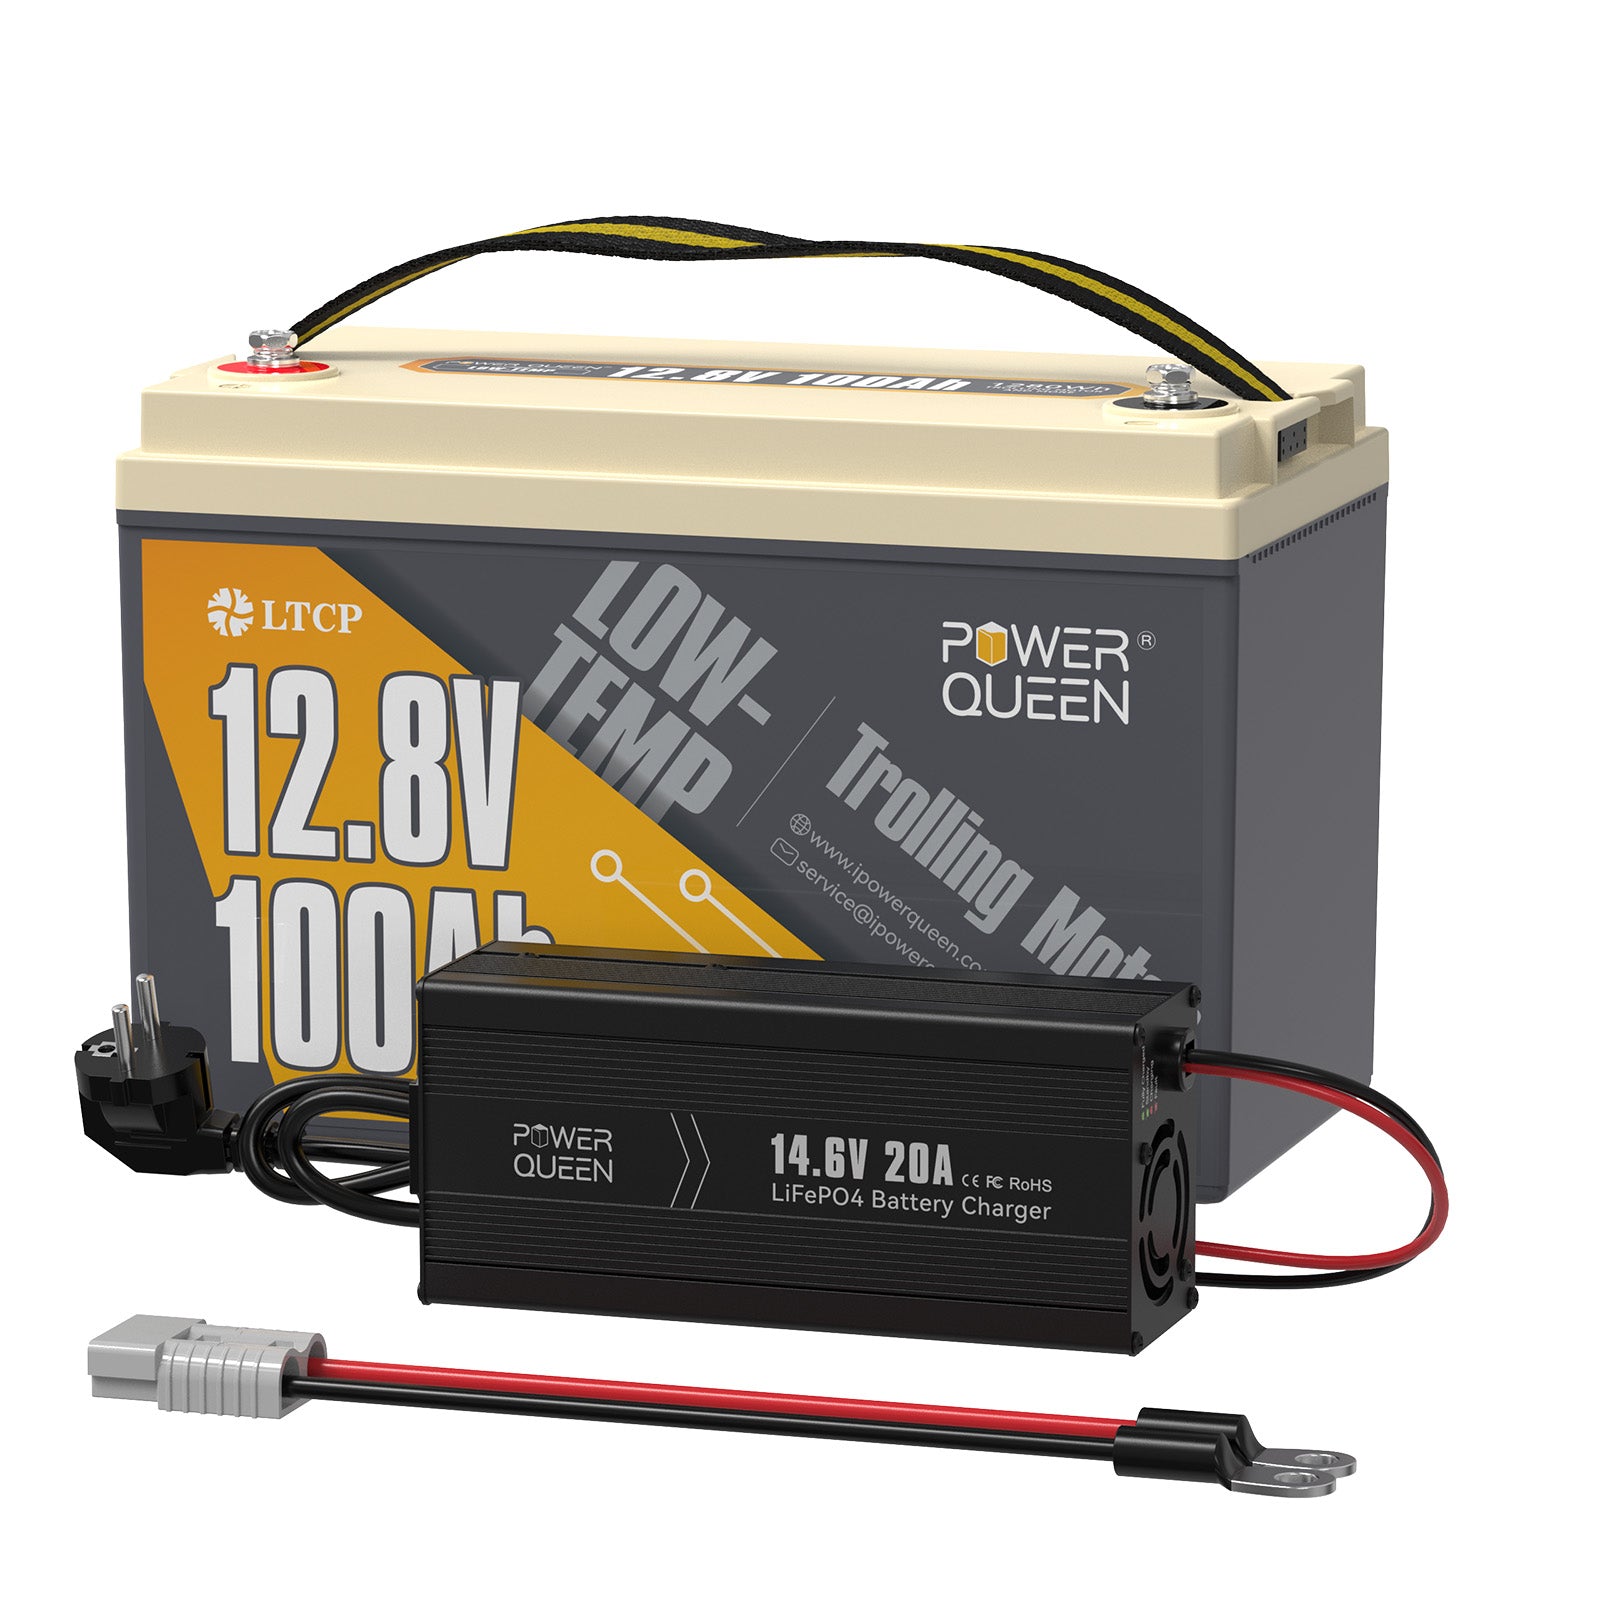 【0% IVA】Batteria Power Queen 12V 100Ah LiFePO4 a bassa temperatura, batteria per motore da pesca alla traina